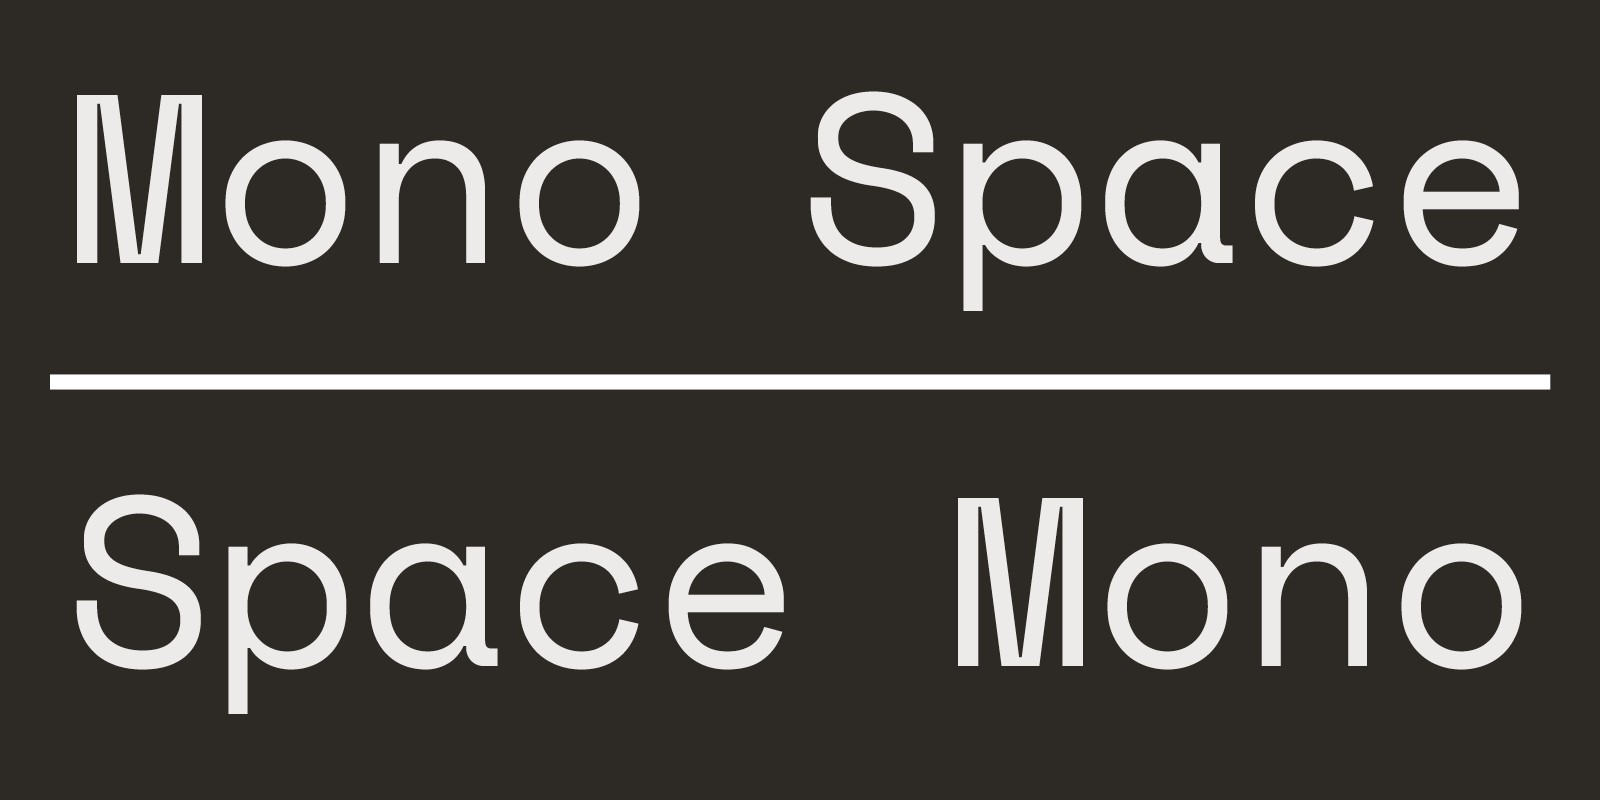 Font Space Mono